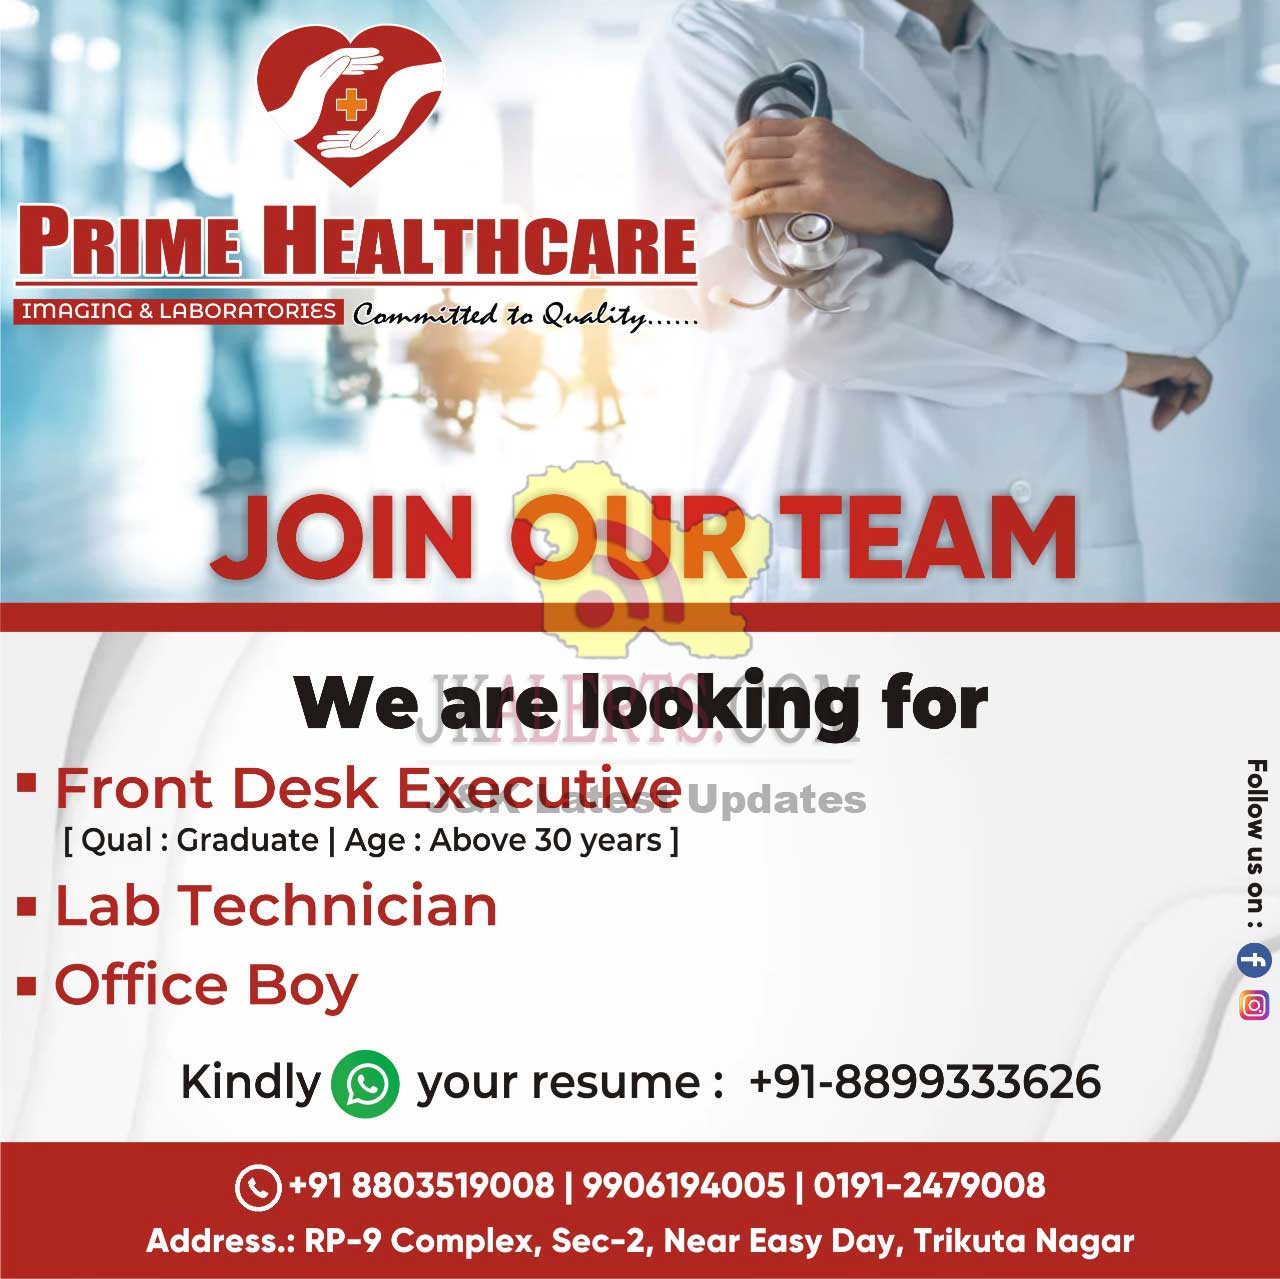 Jobs in Prime Healthcare Laboratories Jammu.